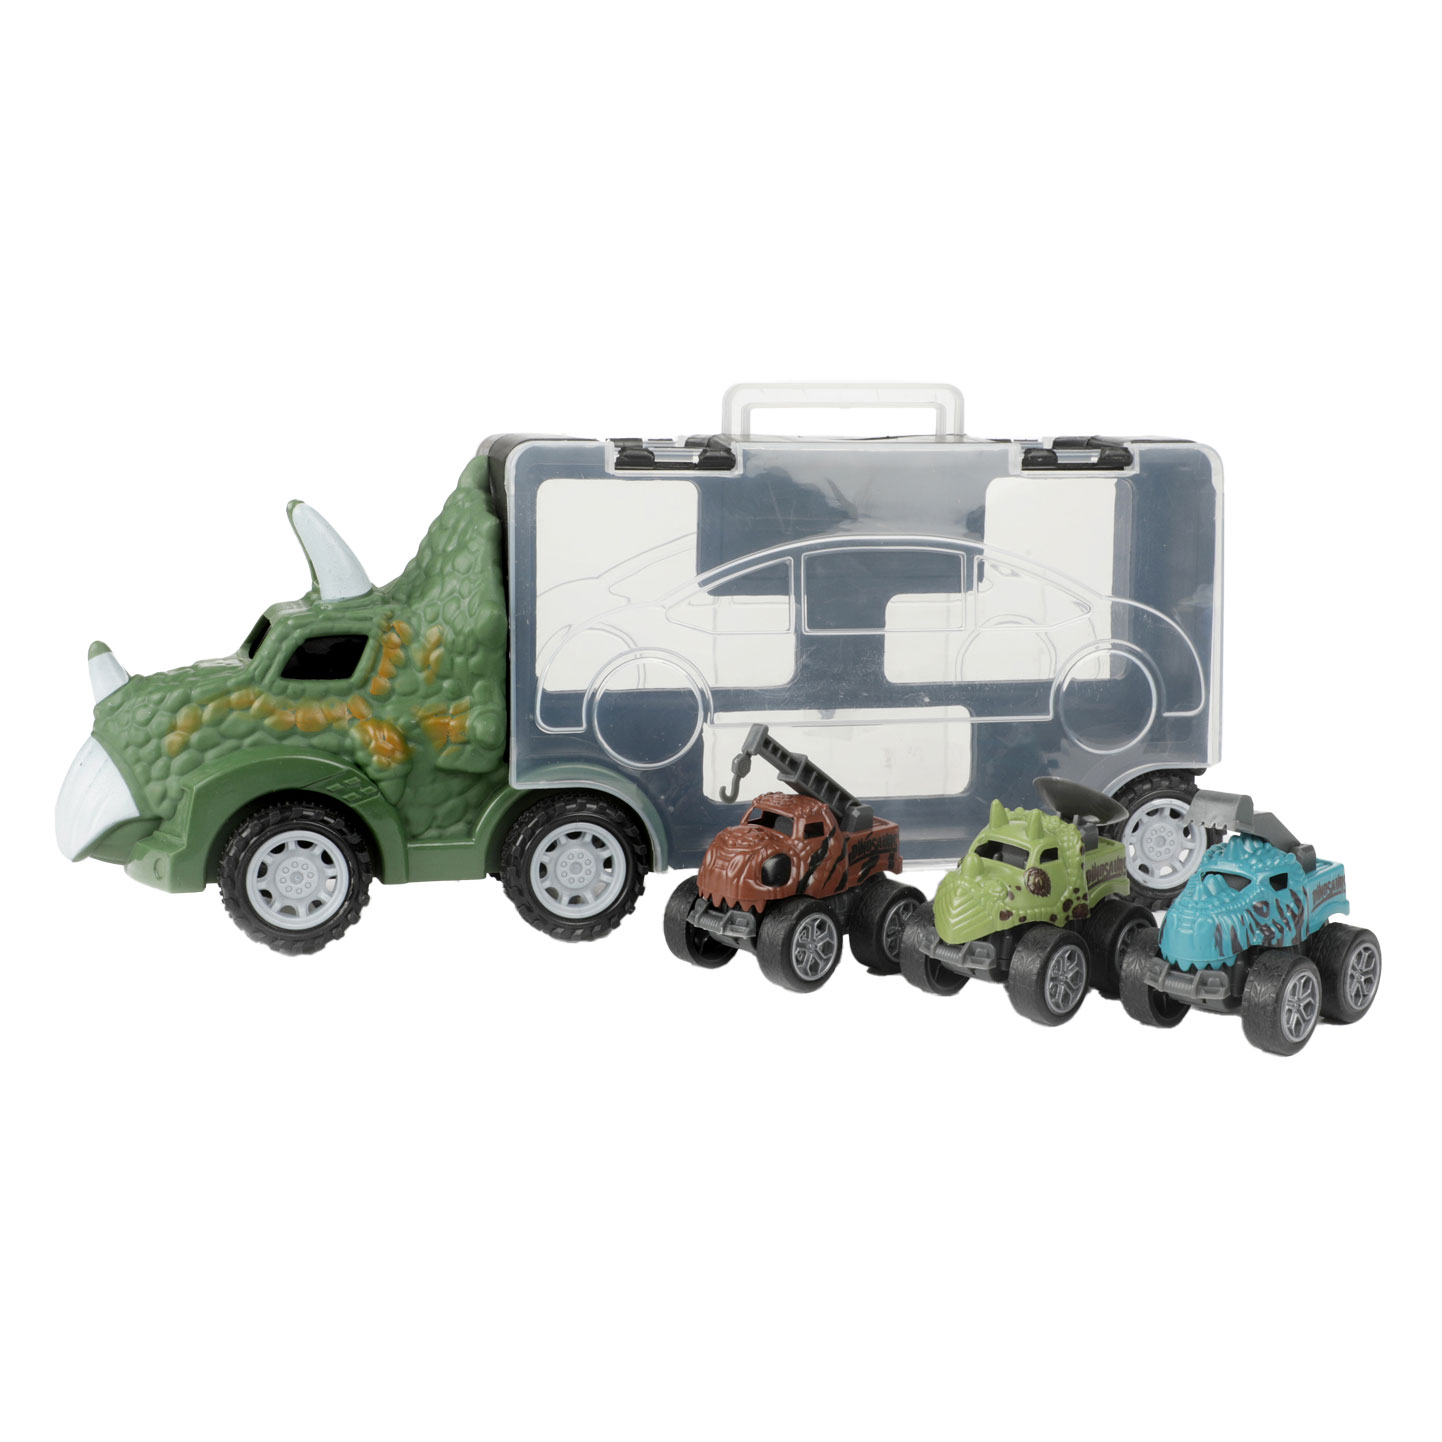 Acheter Camion Dino World of Dinosaurs avec 3 voitures à tirer en ligne?